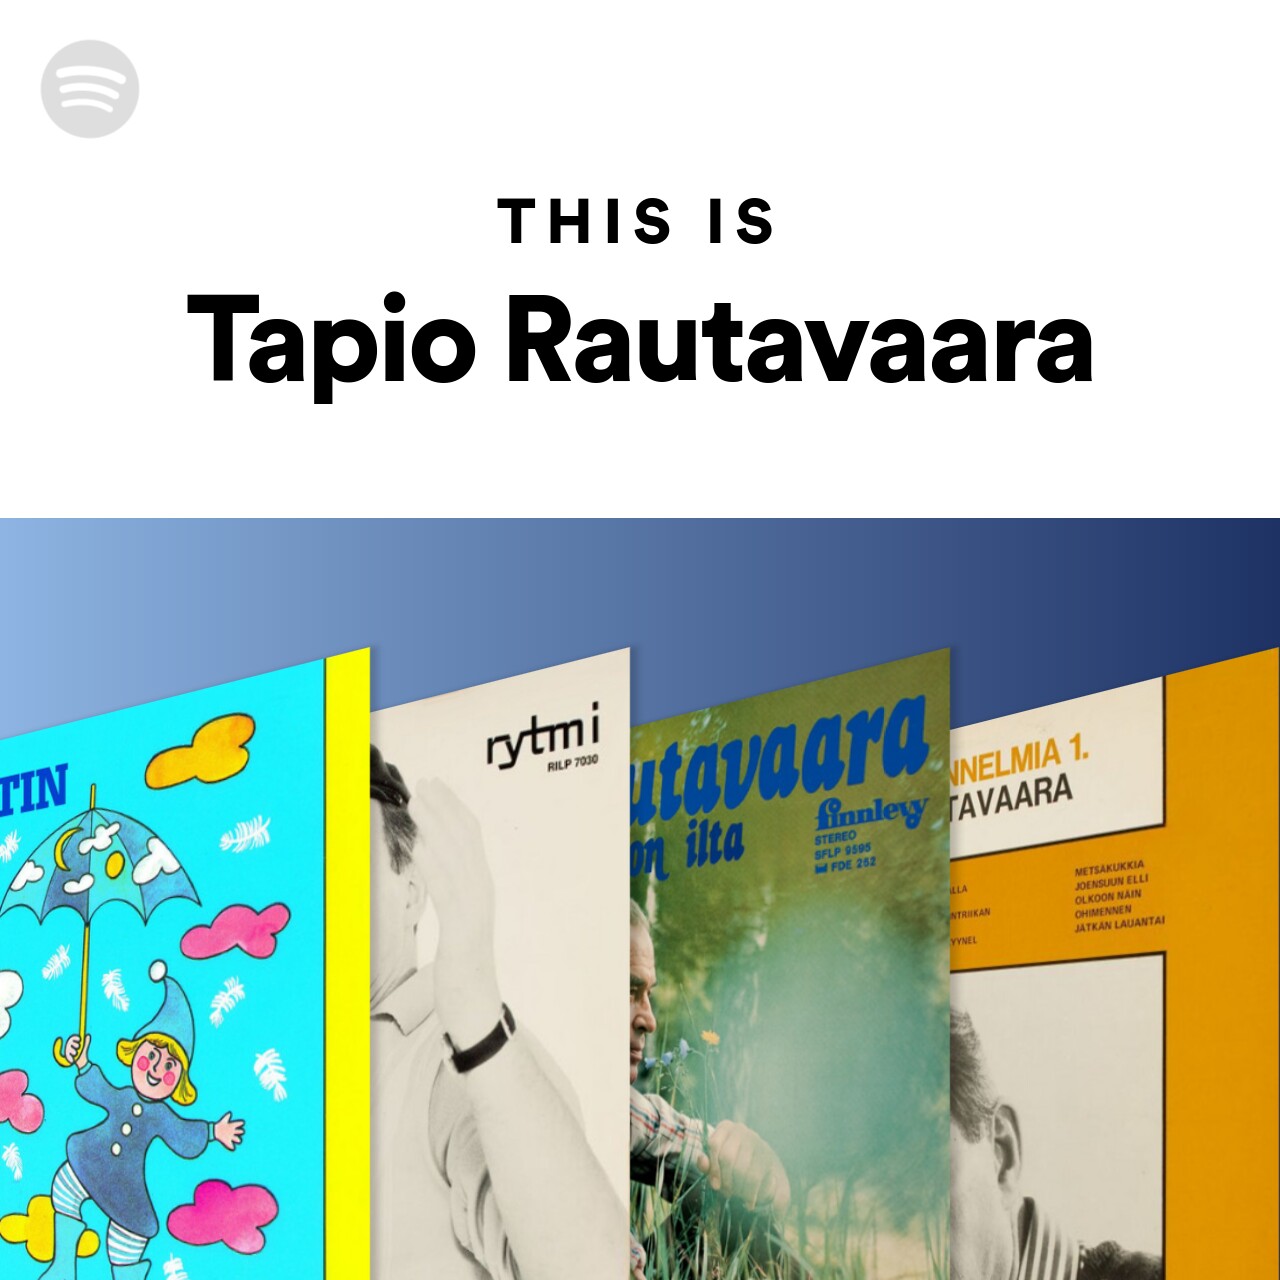 This Is Tapio Rautavaara | Spotify Playlist